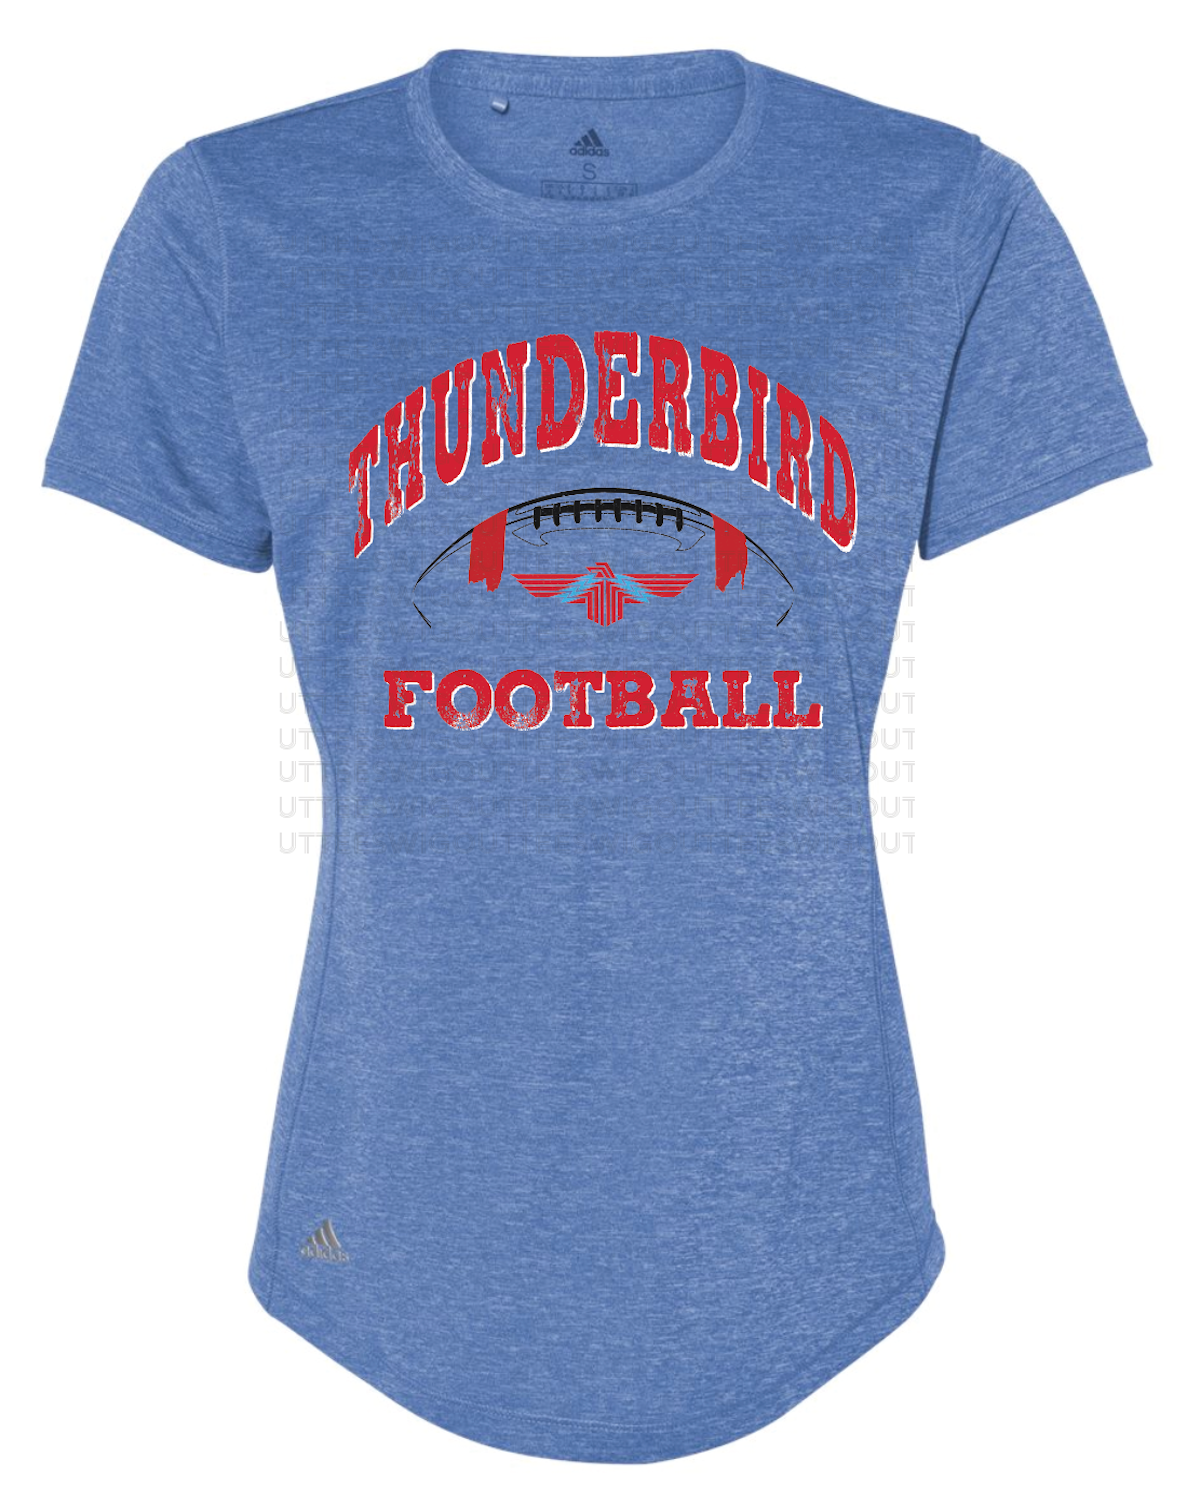 Thunderbird Football Adidas Women's Performance Polo